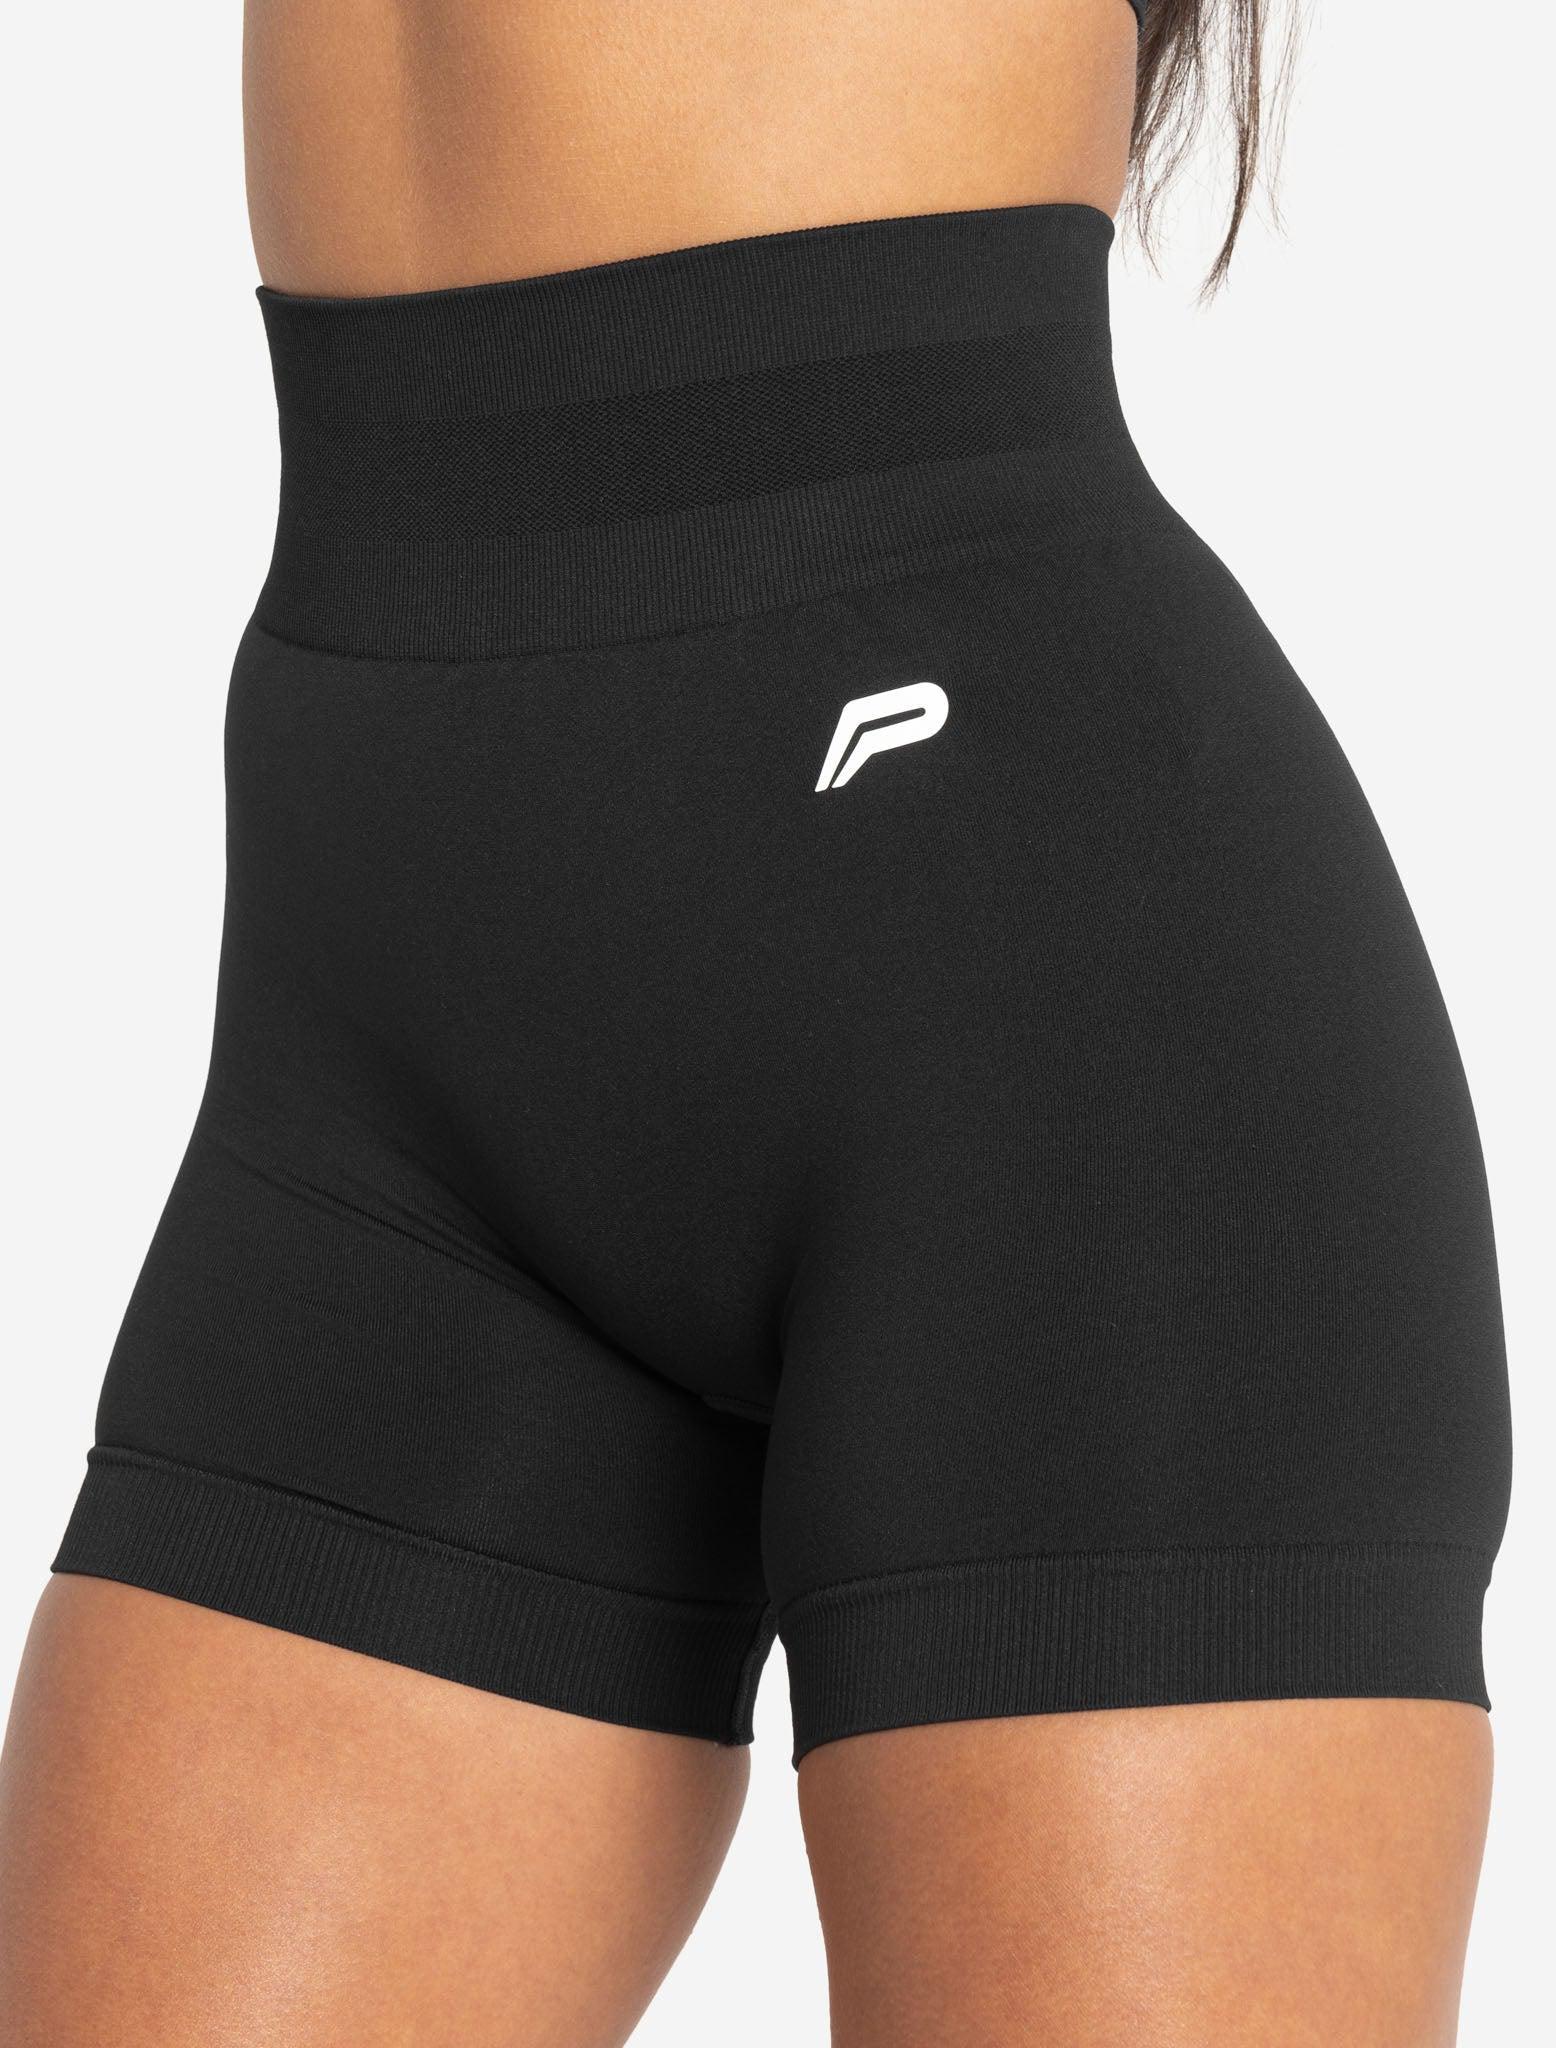 Effortless Scrunch Shorts- Black Camo - ShopperBoard